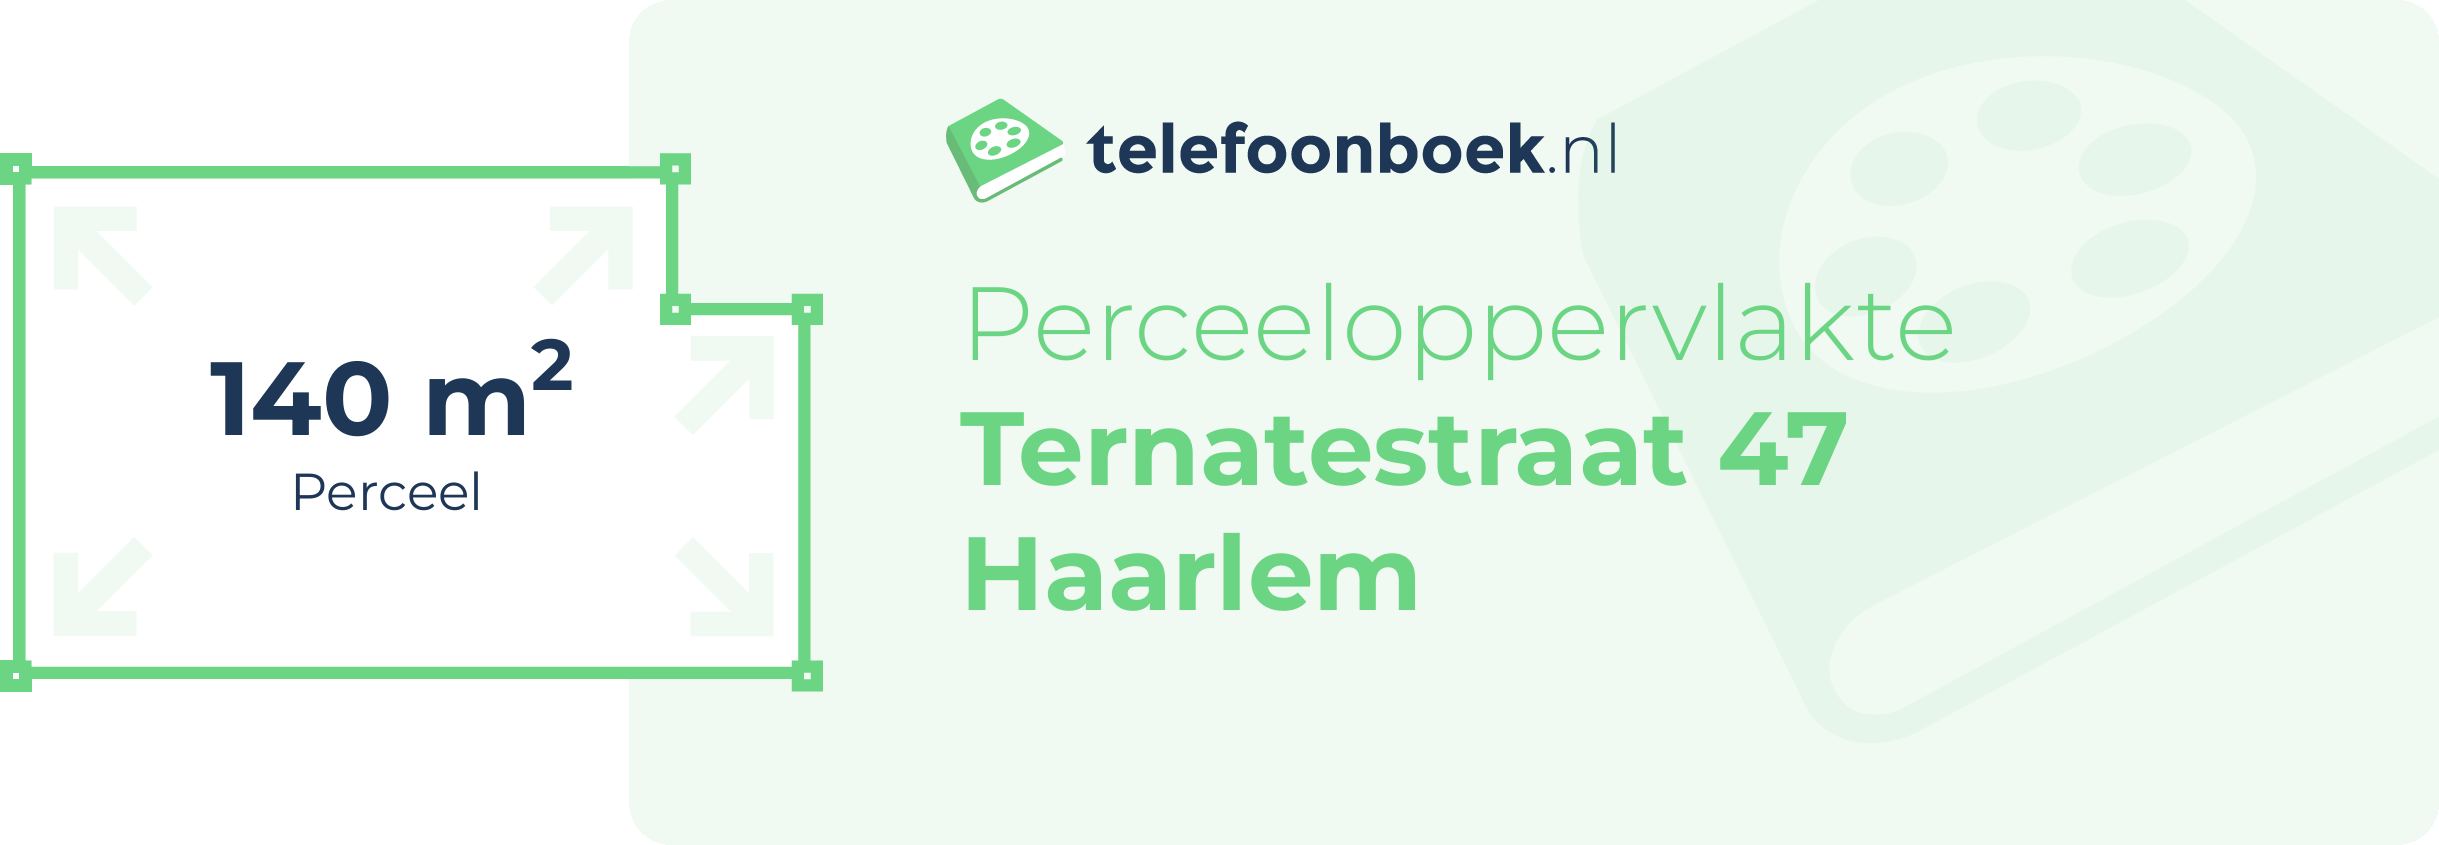 Perceeloppervlakte Ternatestraat 47 Haarlem